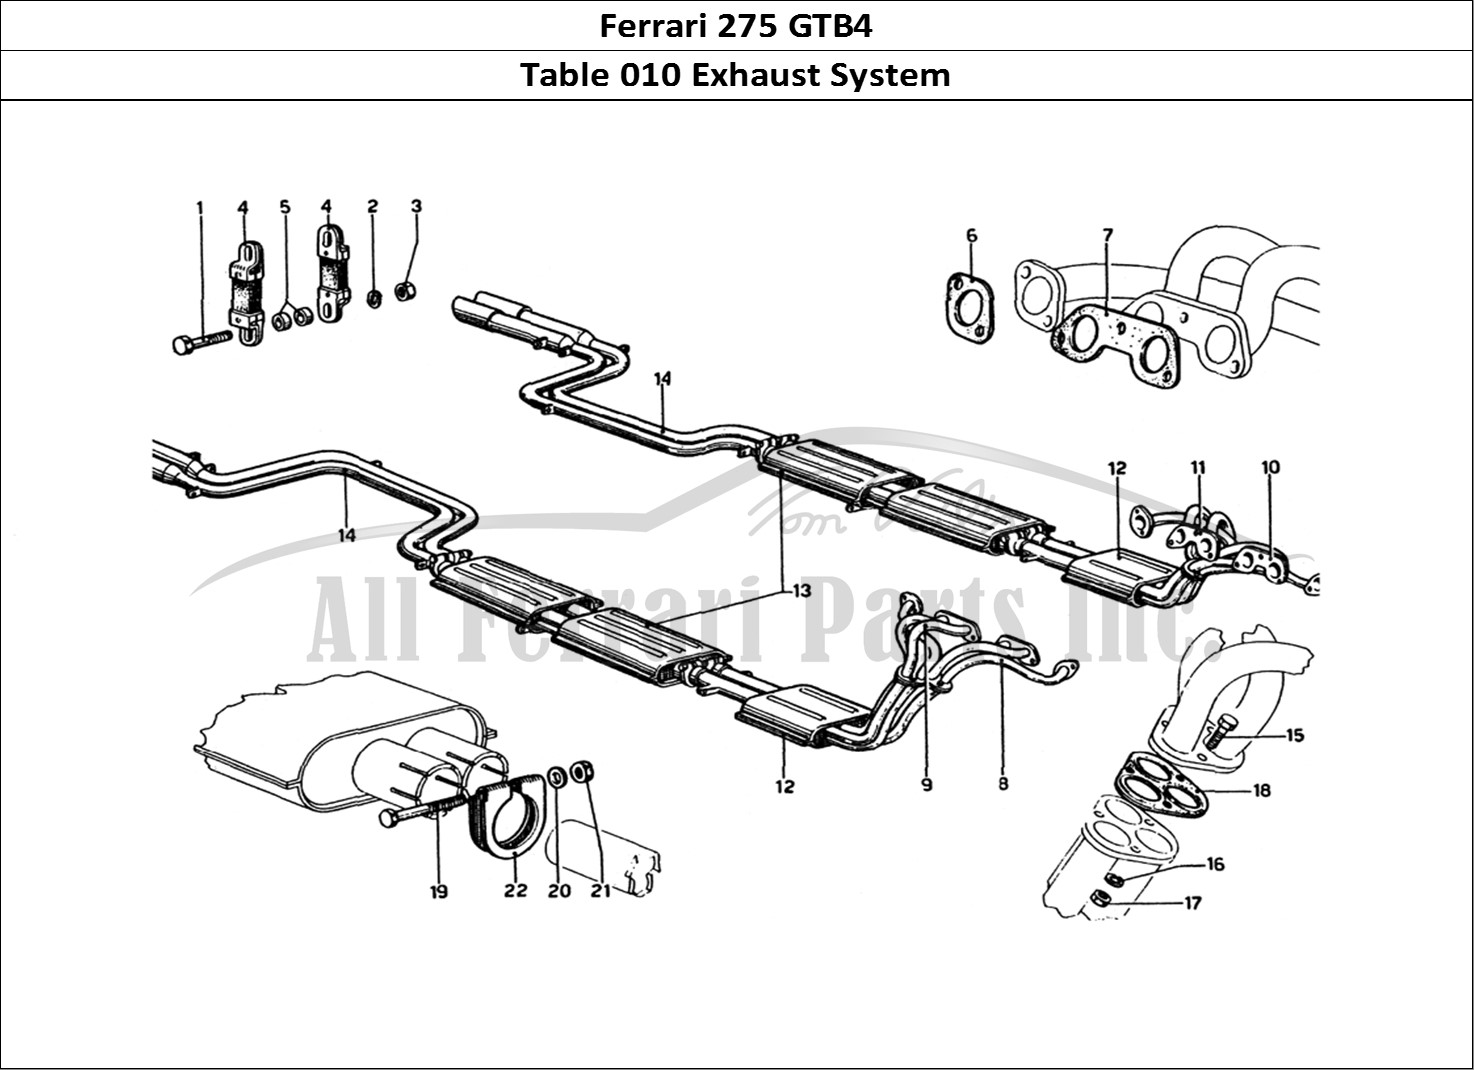 Ferrari Parts Ferrari 275 GTB4 Page 010 Exhaust Pipes Assembly